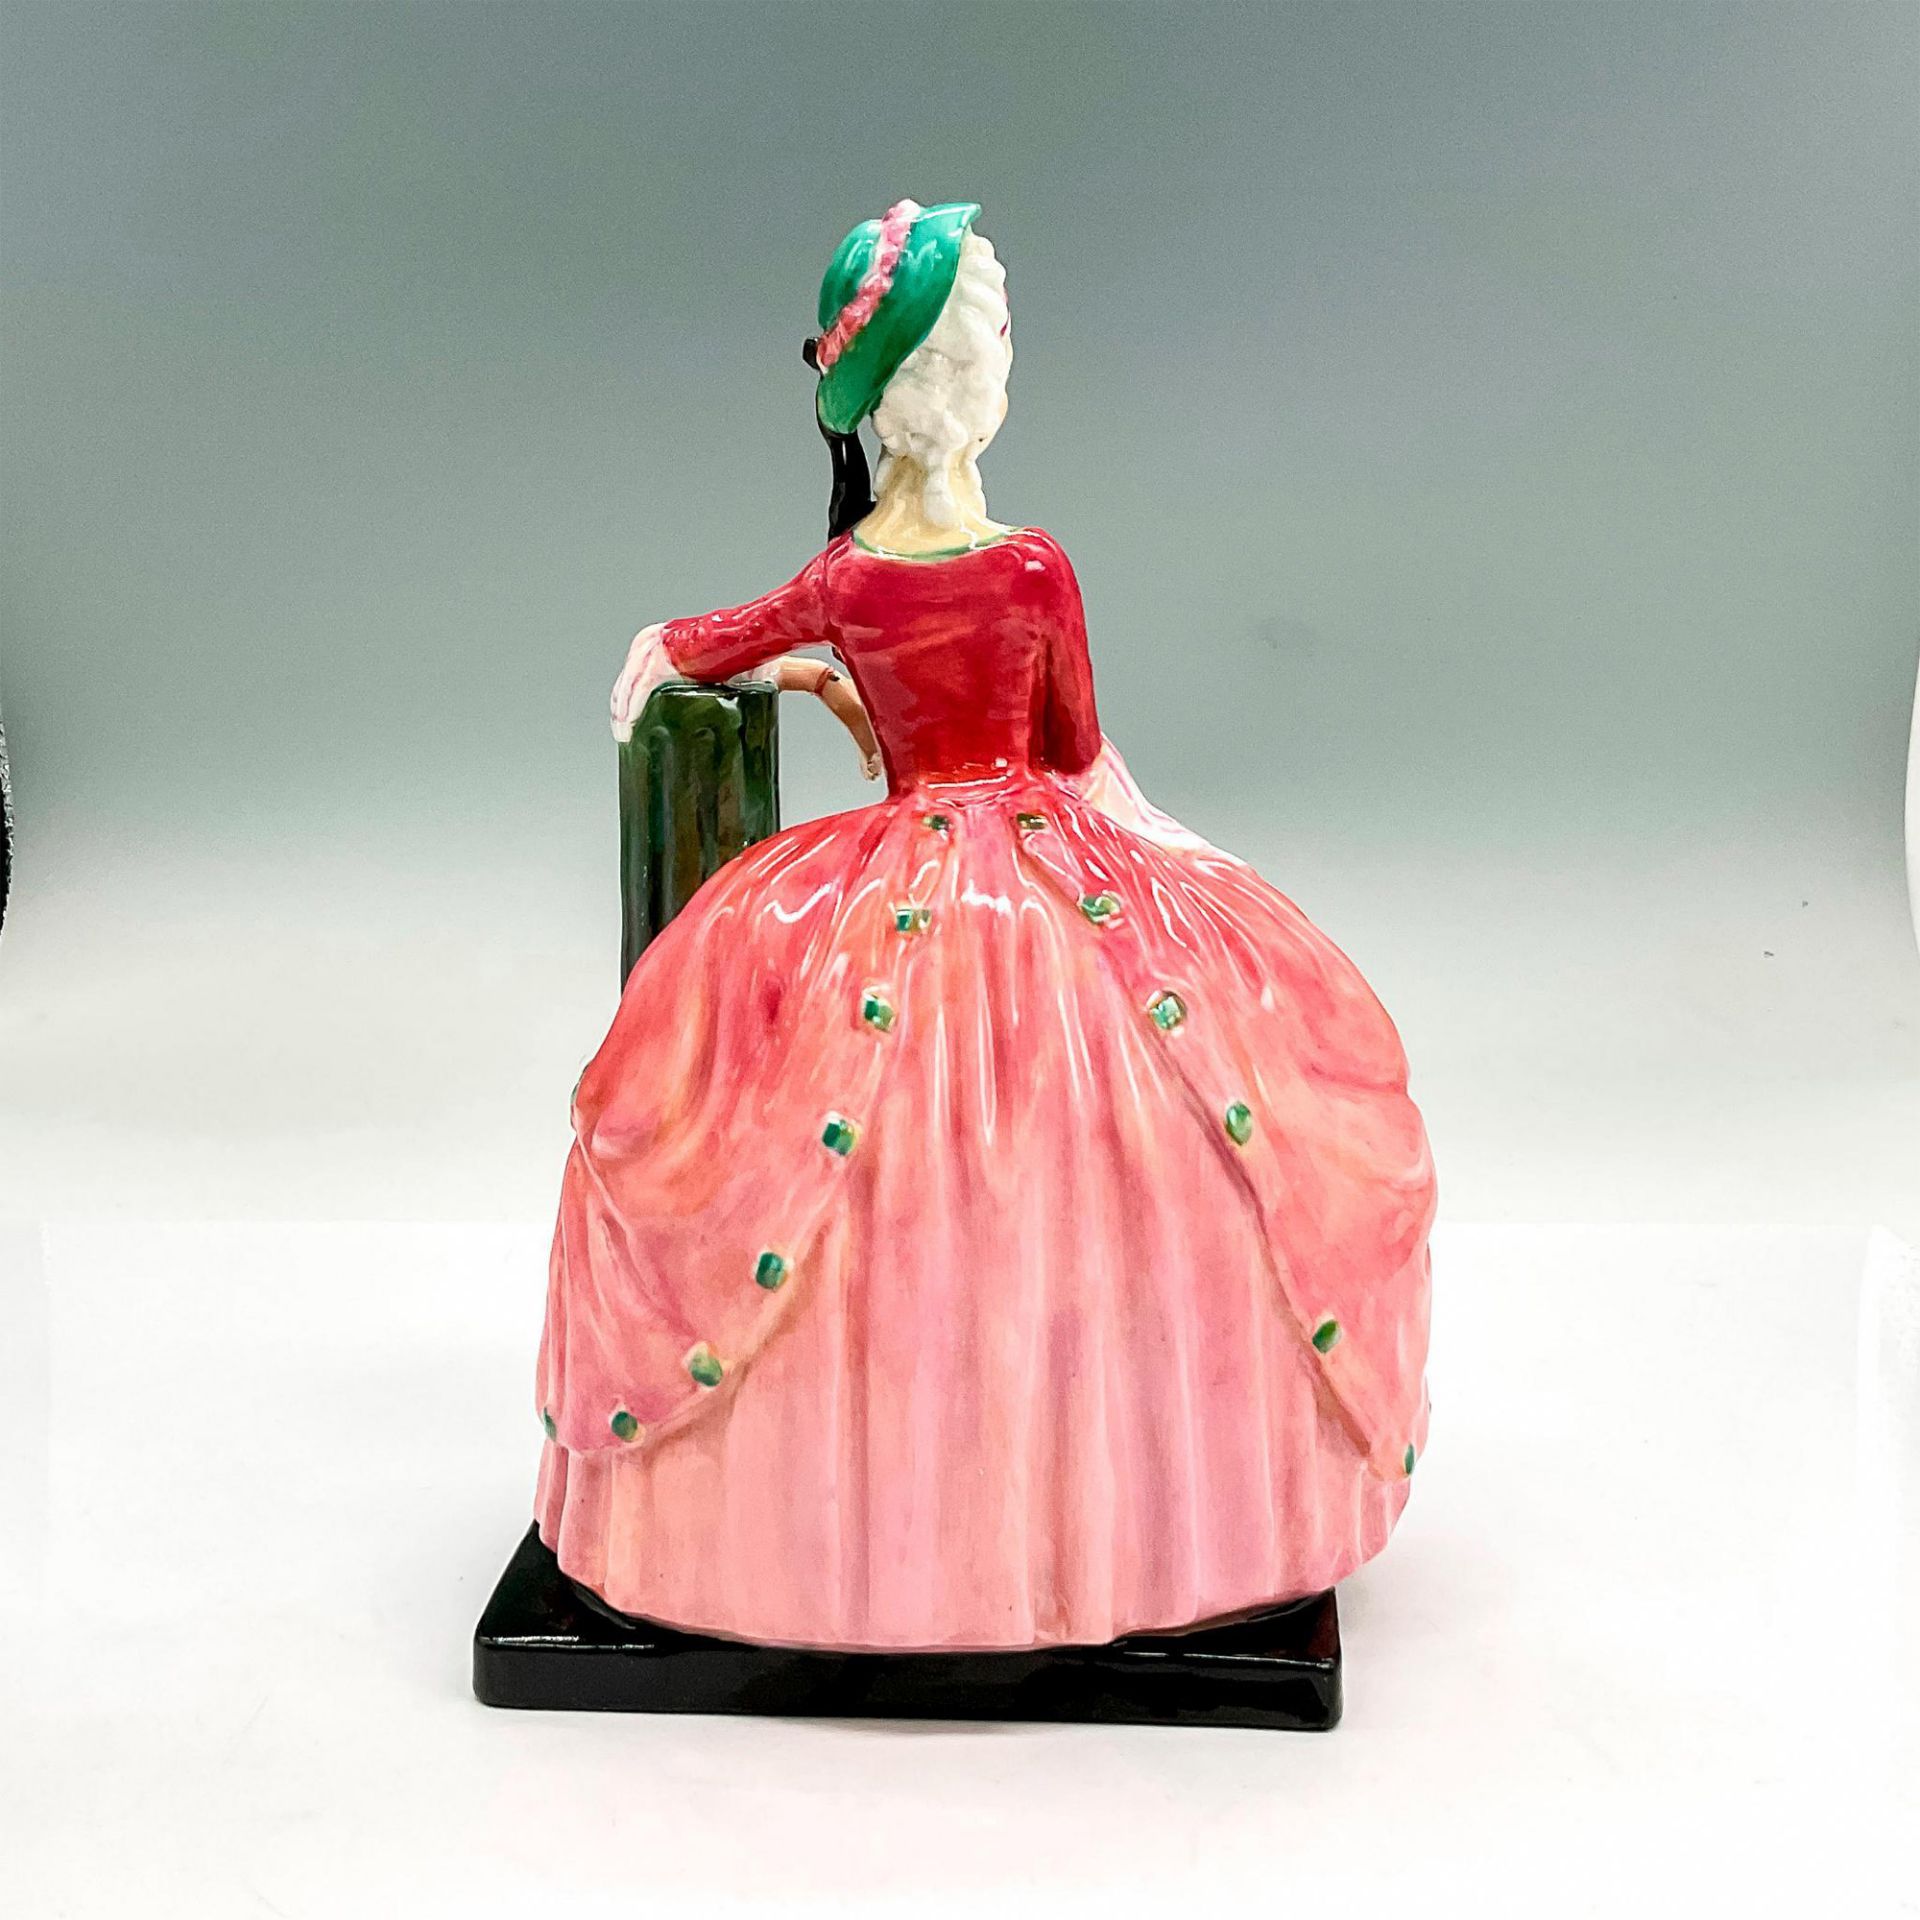 Antoinette - HN1850 - Royal Doulton Figurine - Image 2 of 3